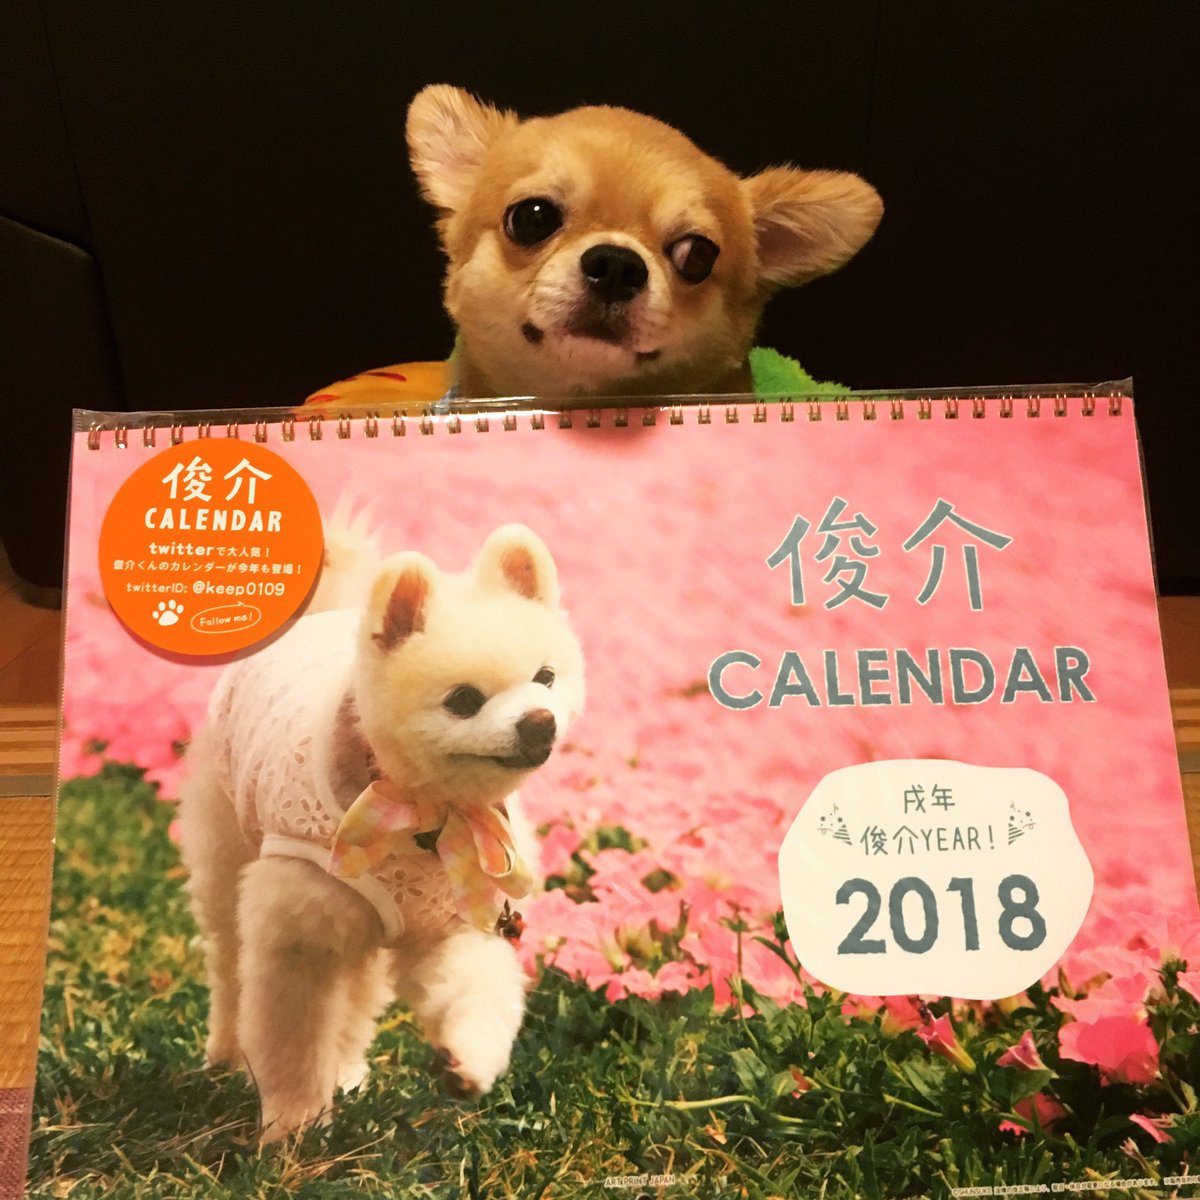 Lineスタンプ販売中 Ar Twitter 俊介くんカレンダー 買いましたあ 来年は戌年スカルyear チワワ Chihuahua 犬 いぬ 俊介くん 俊介君 俊介 俊介くんありがとう